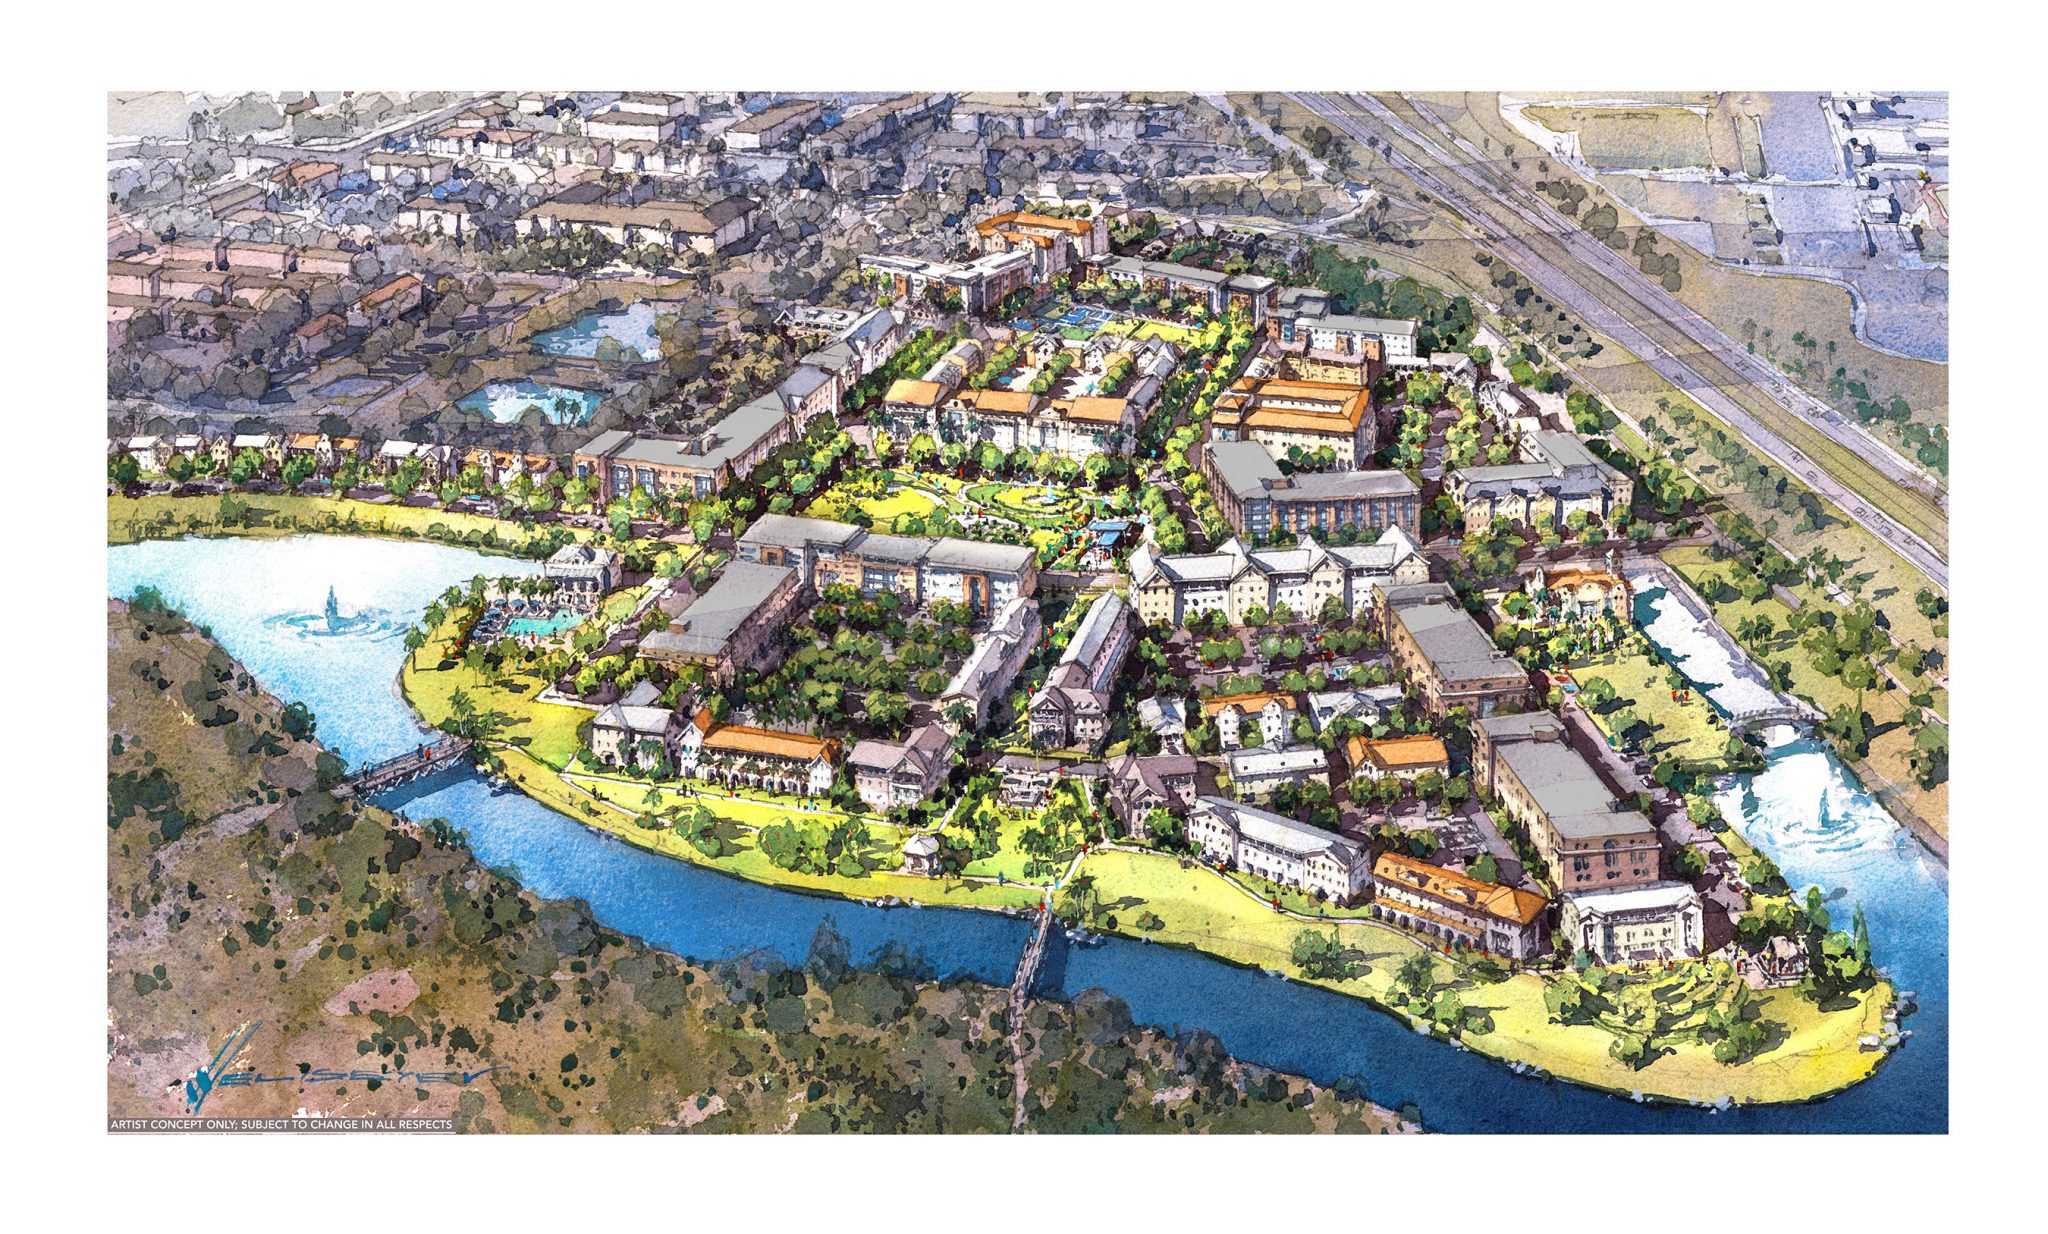 Walt Disney World Picks Location and Developer for Affordable Housing Initiative